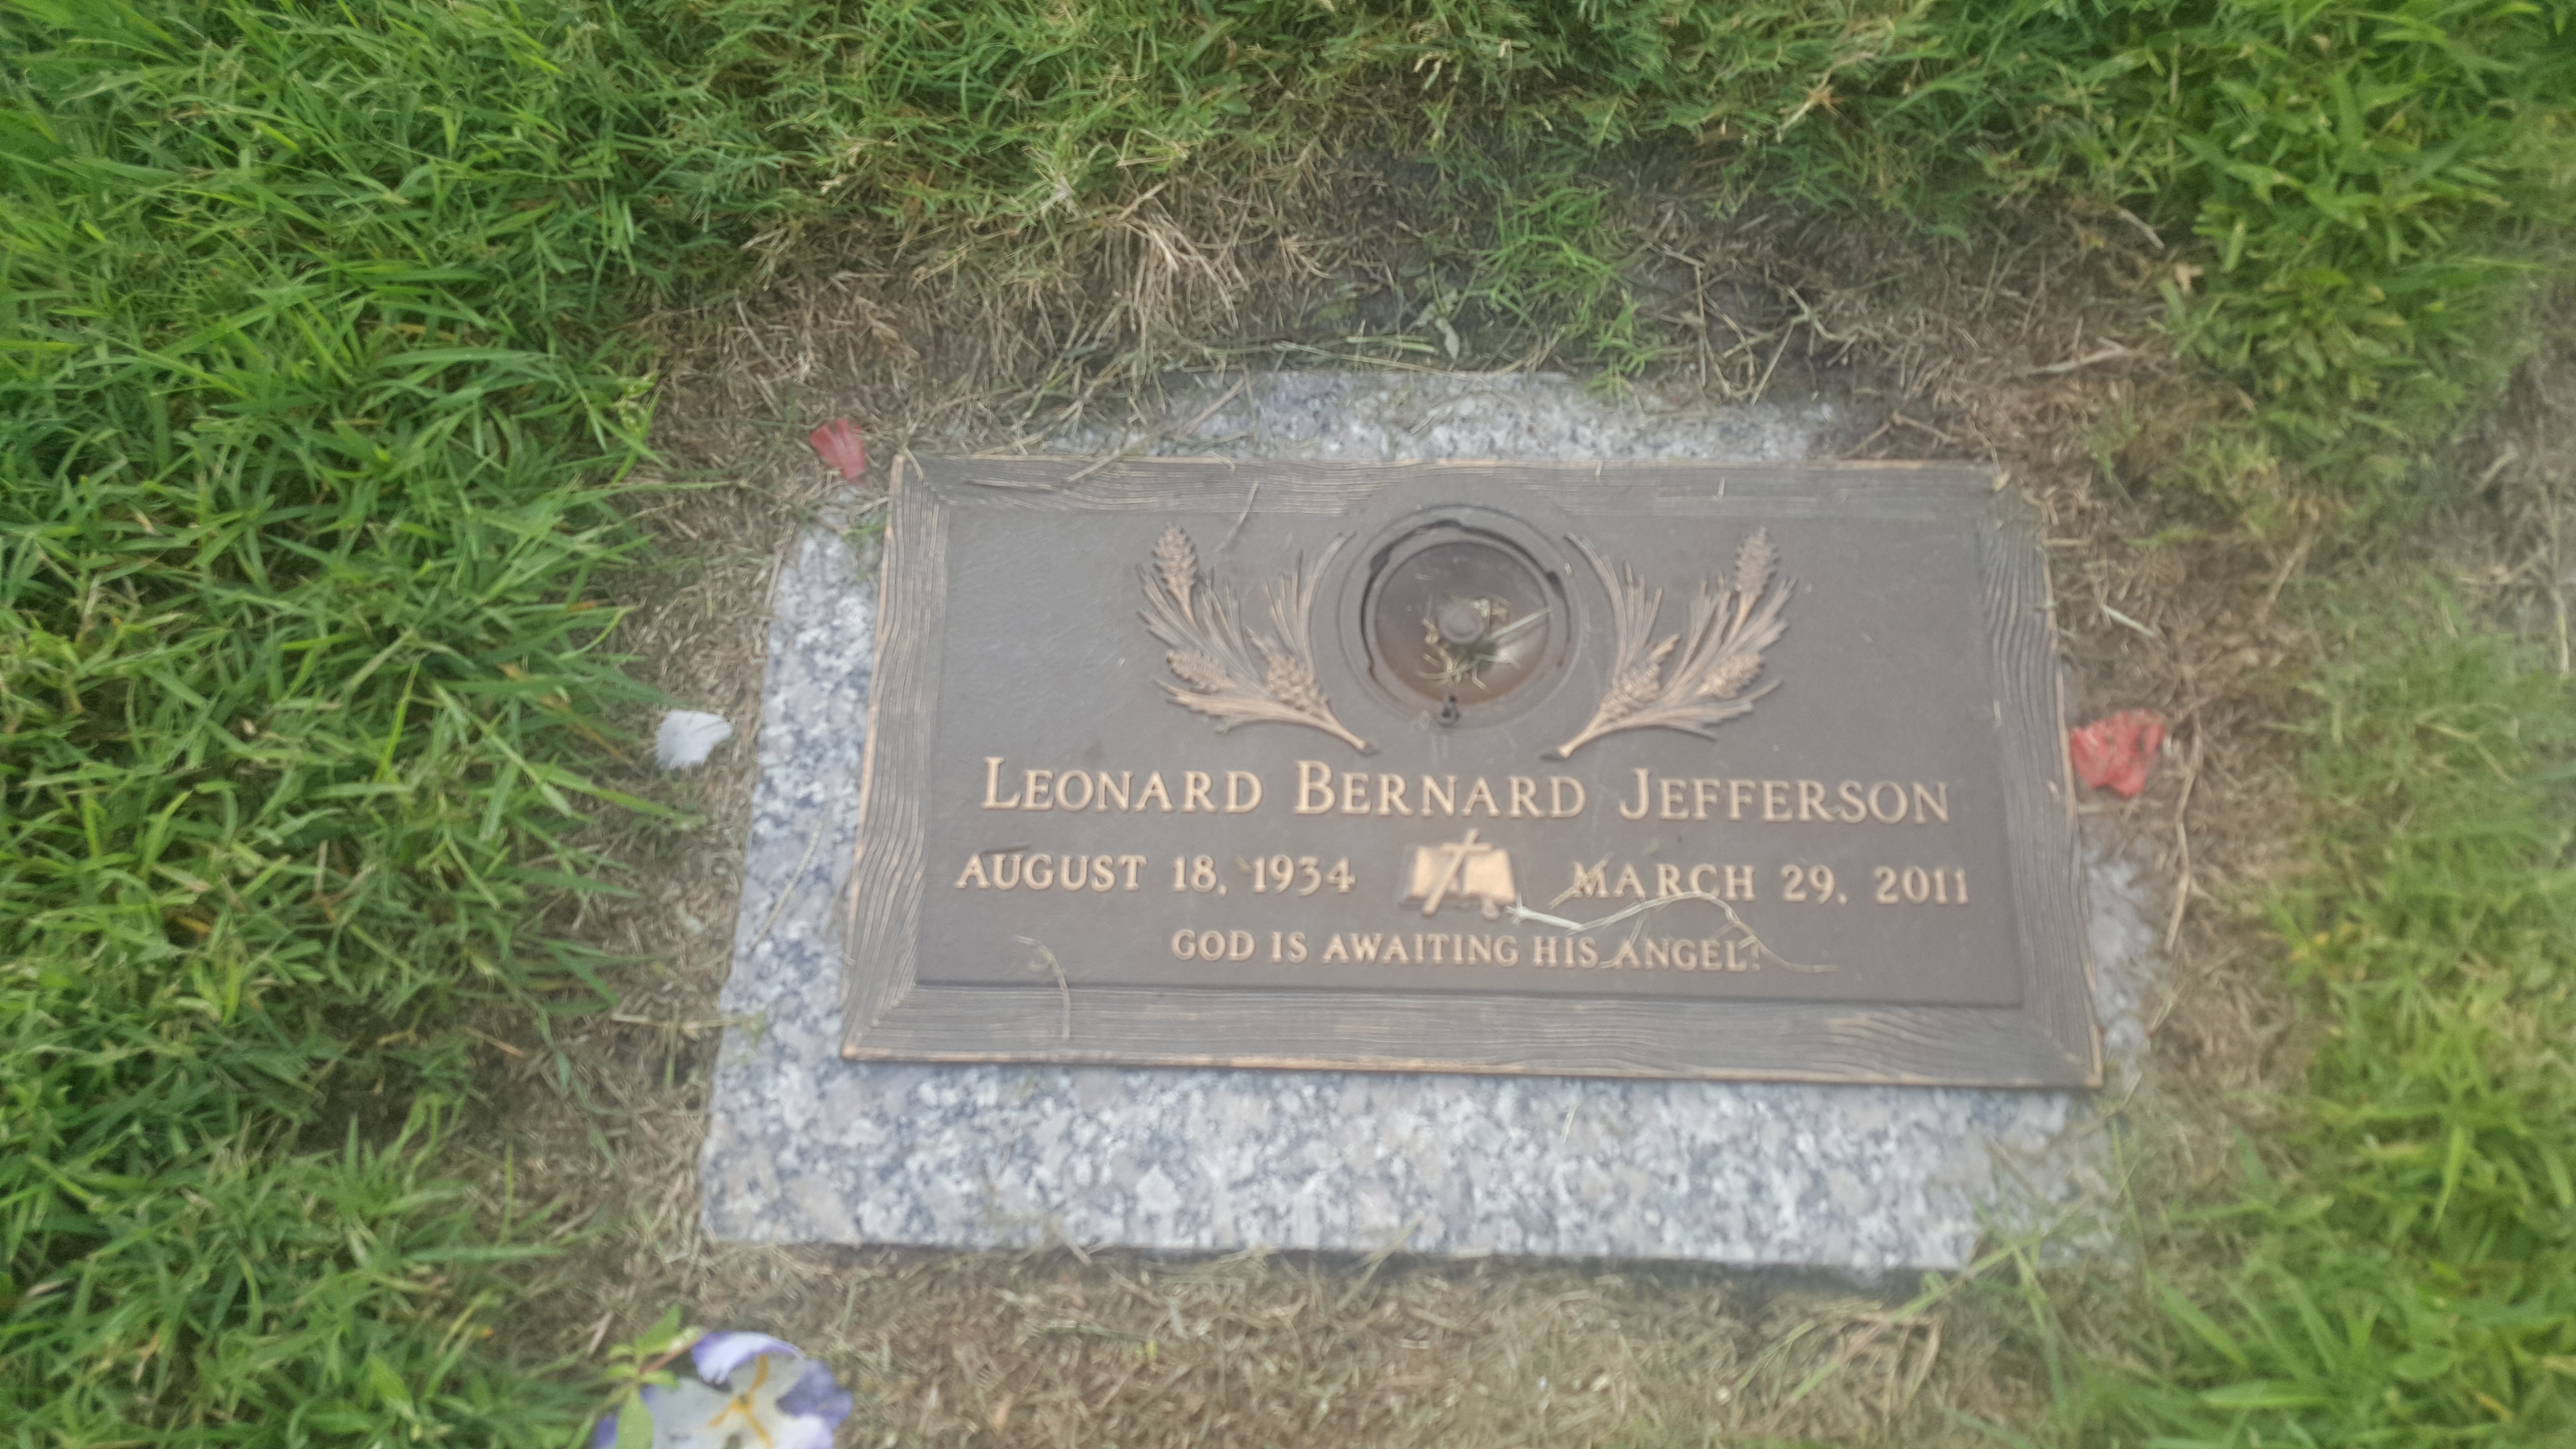 Leonard Bernard Jefferson